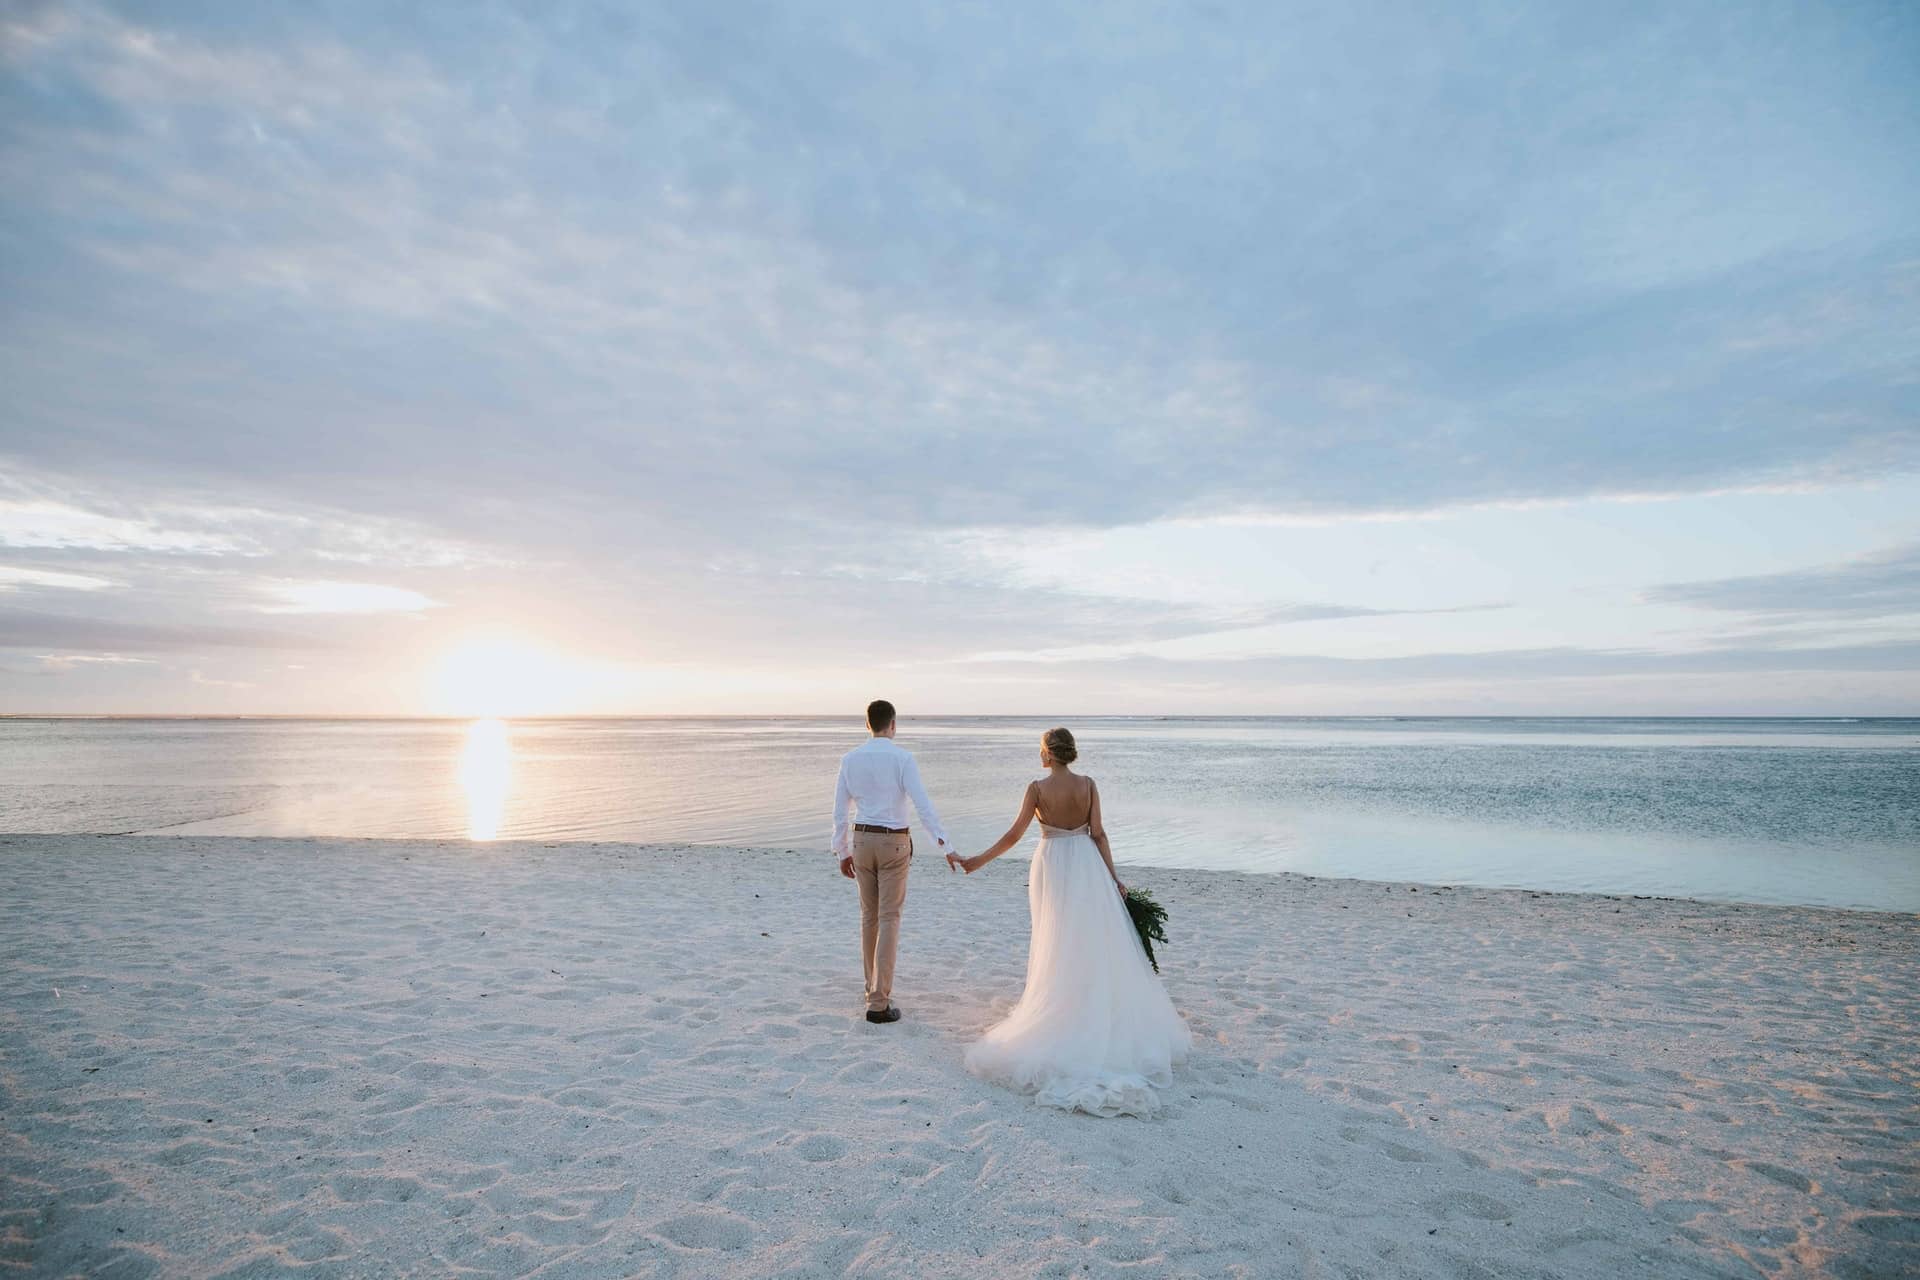 Mauritius. Et brudepar som går på en hvit sandstrand i solnedgang